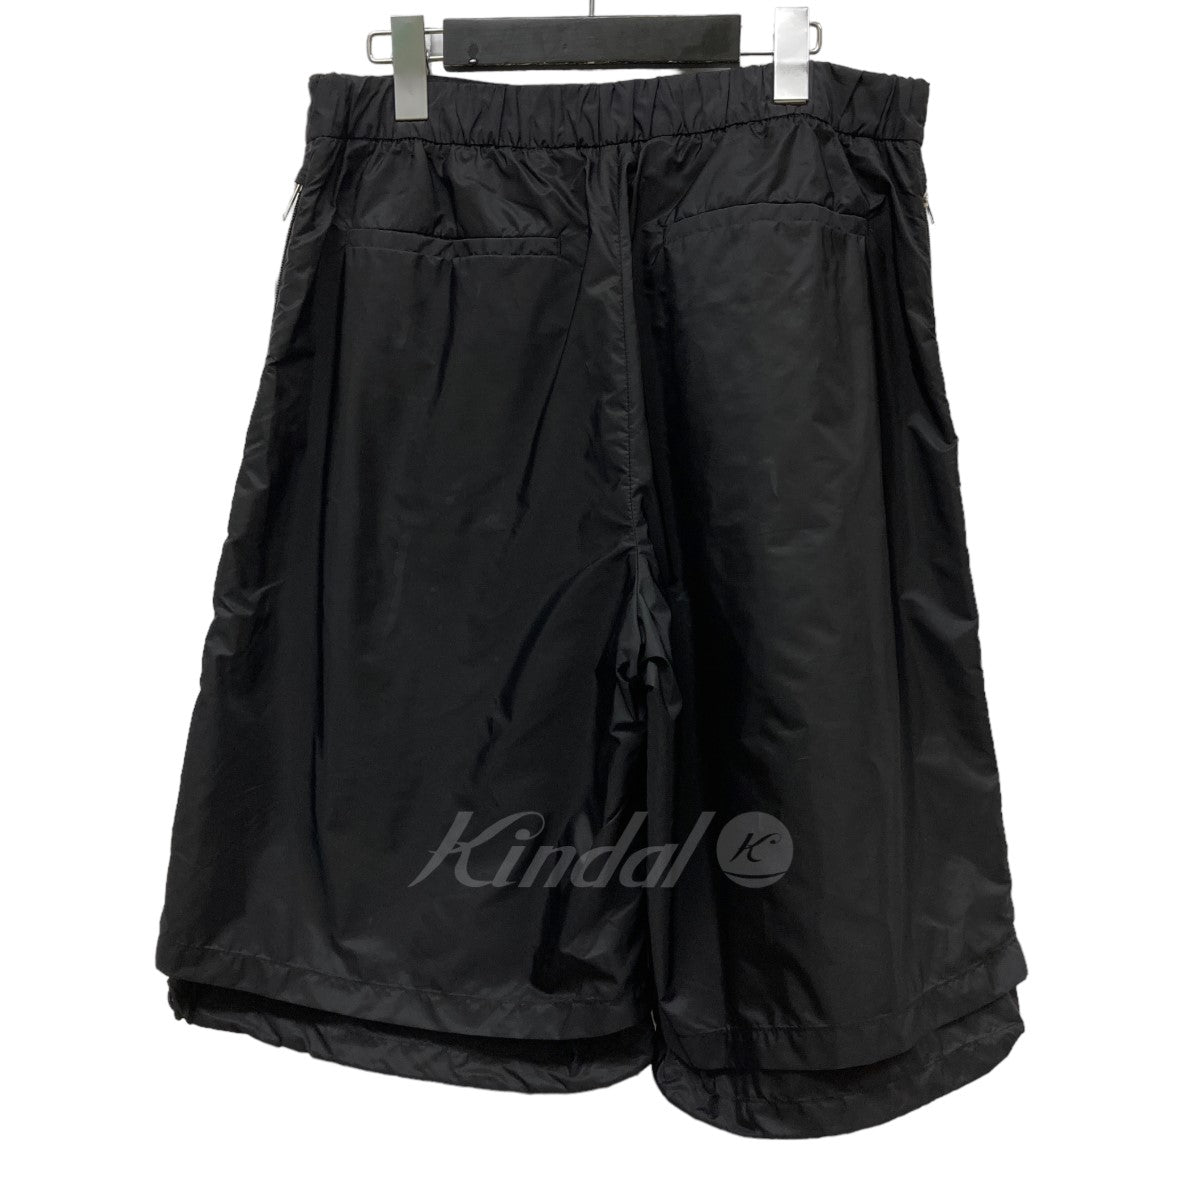 PRADA(プラダ) 「Nylon Side Zip Shorts」 ナイロンショートパンツ SPG79